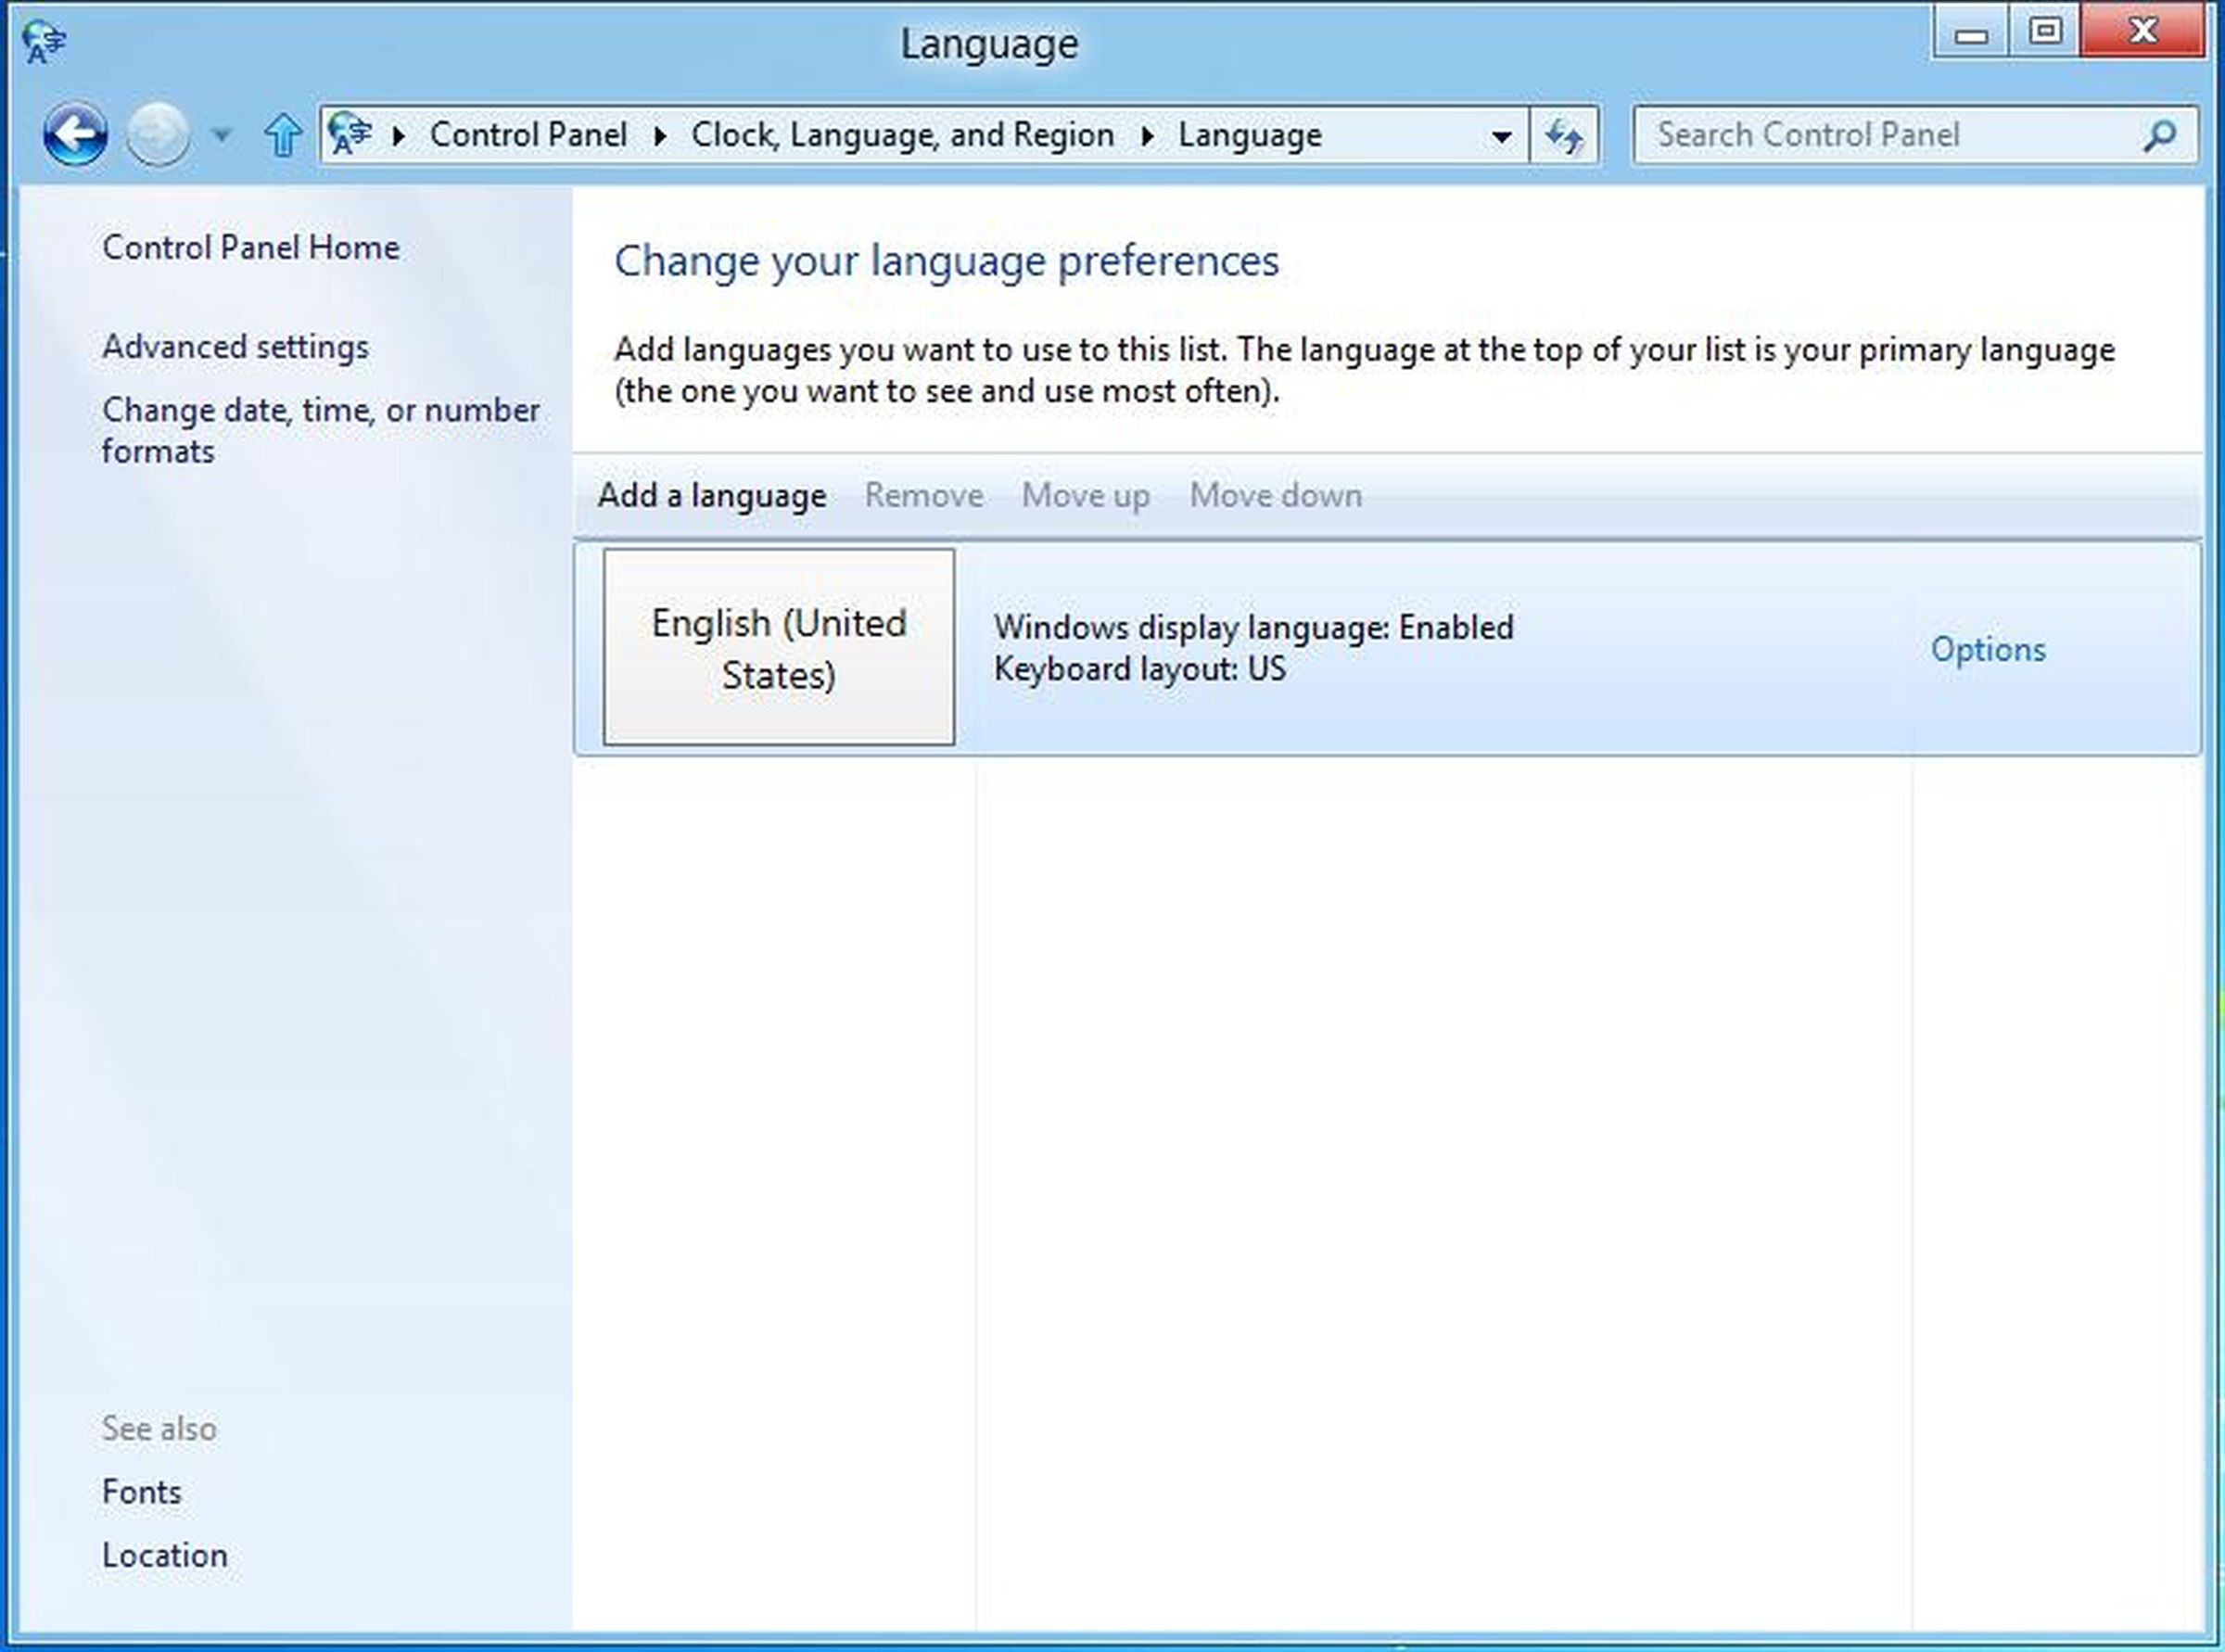 Windows 8 language support screenshots